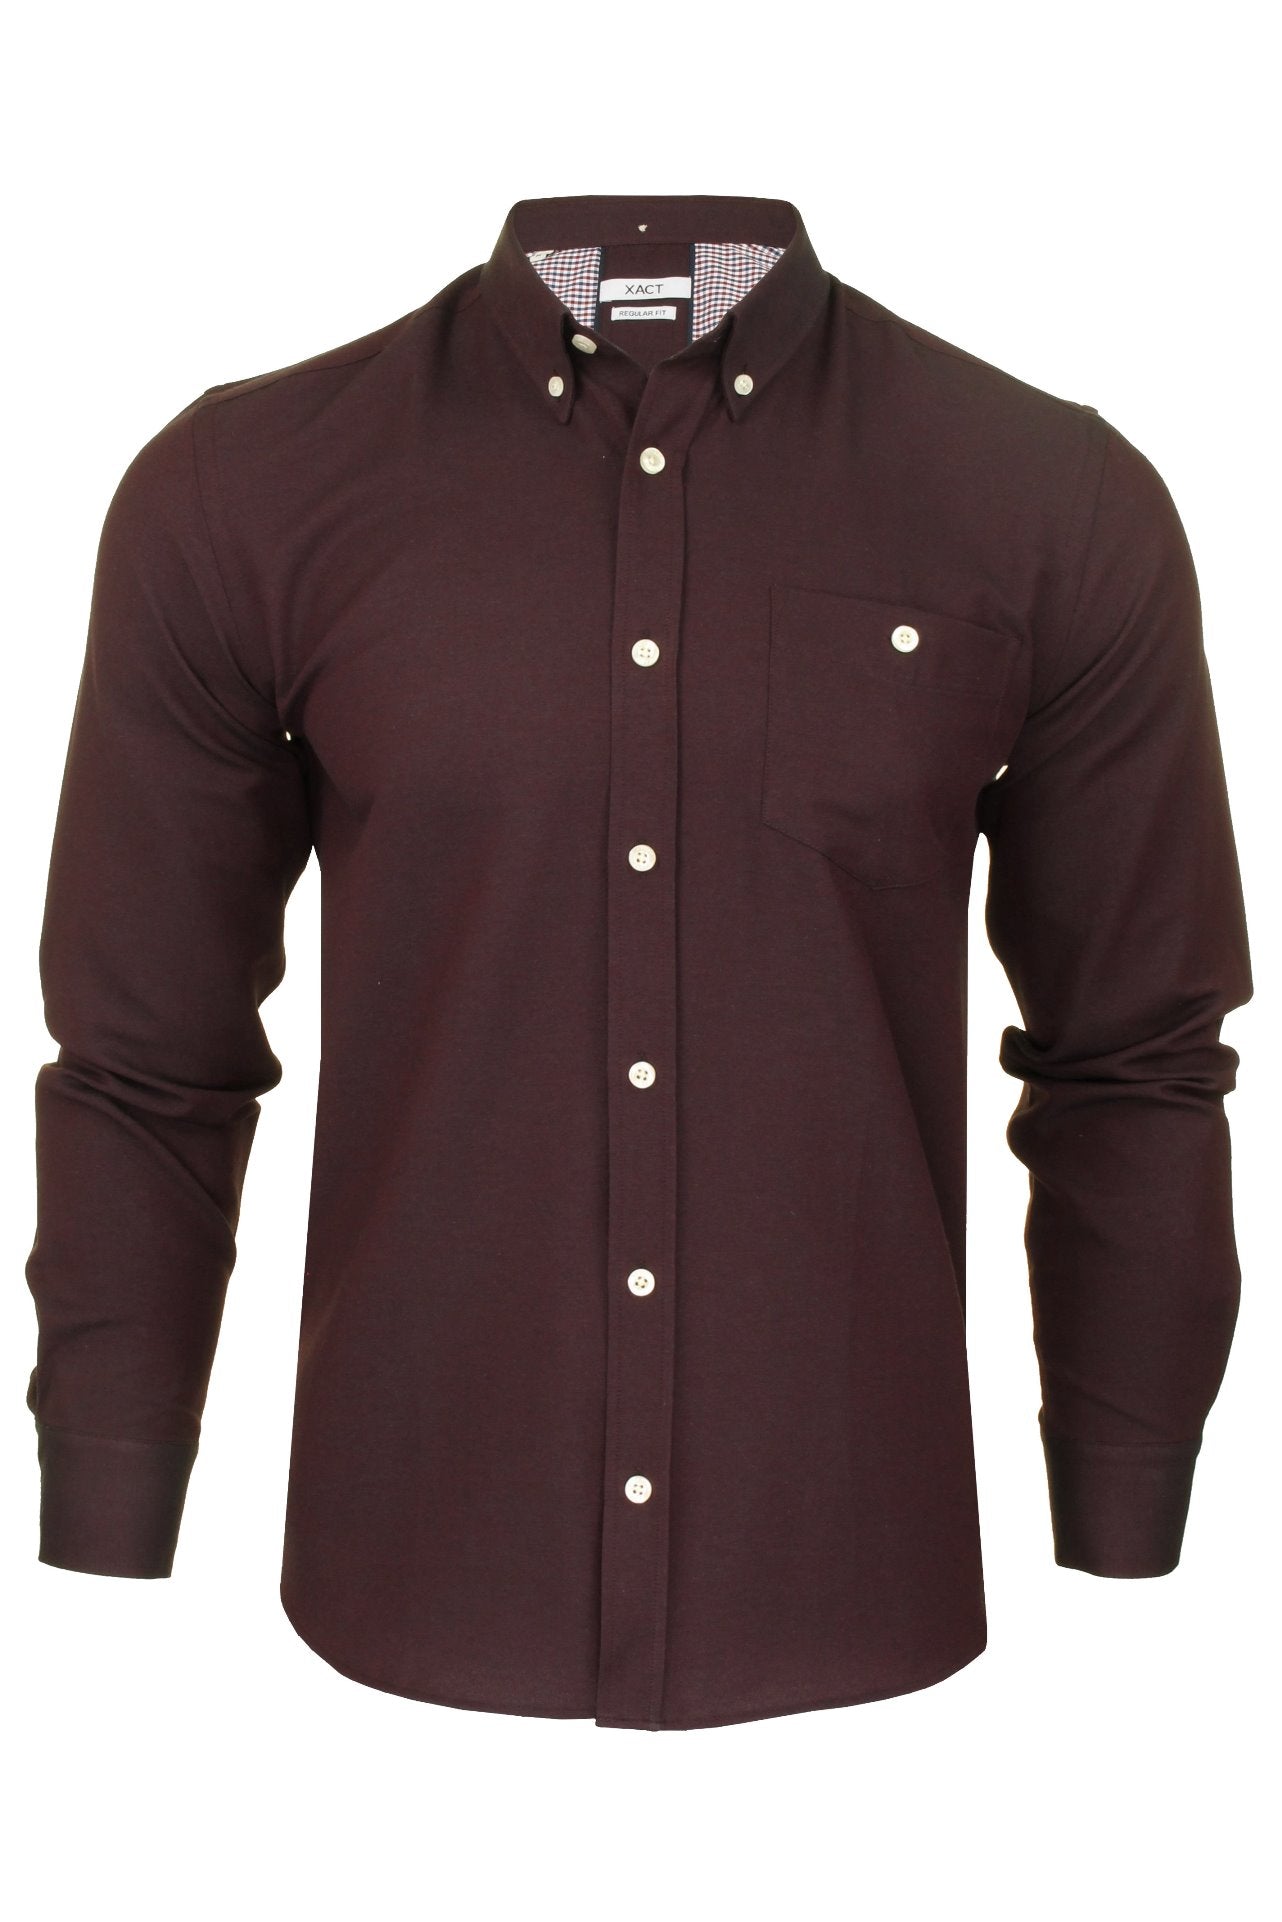 Xact Mens Button Down Oxford Shirt - Long Sleeved-2